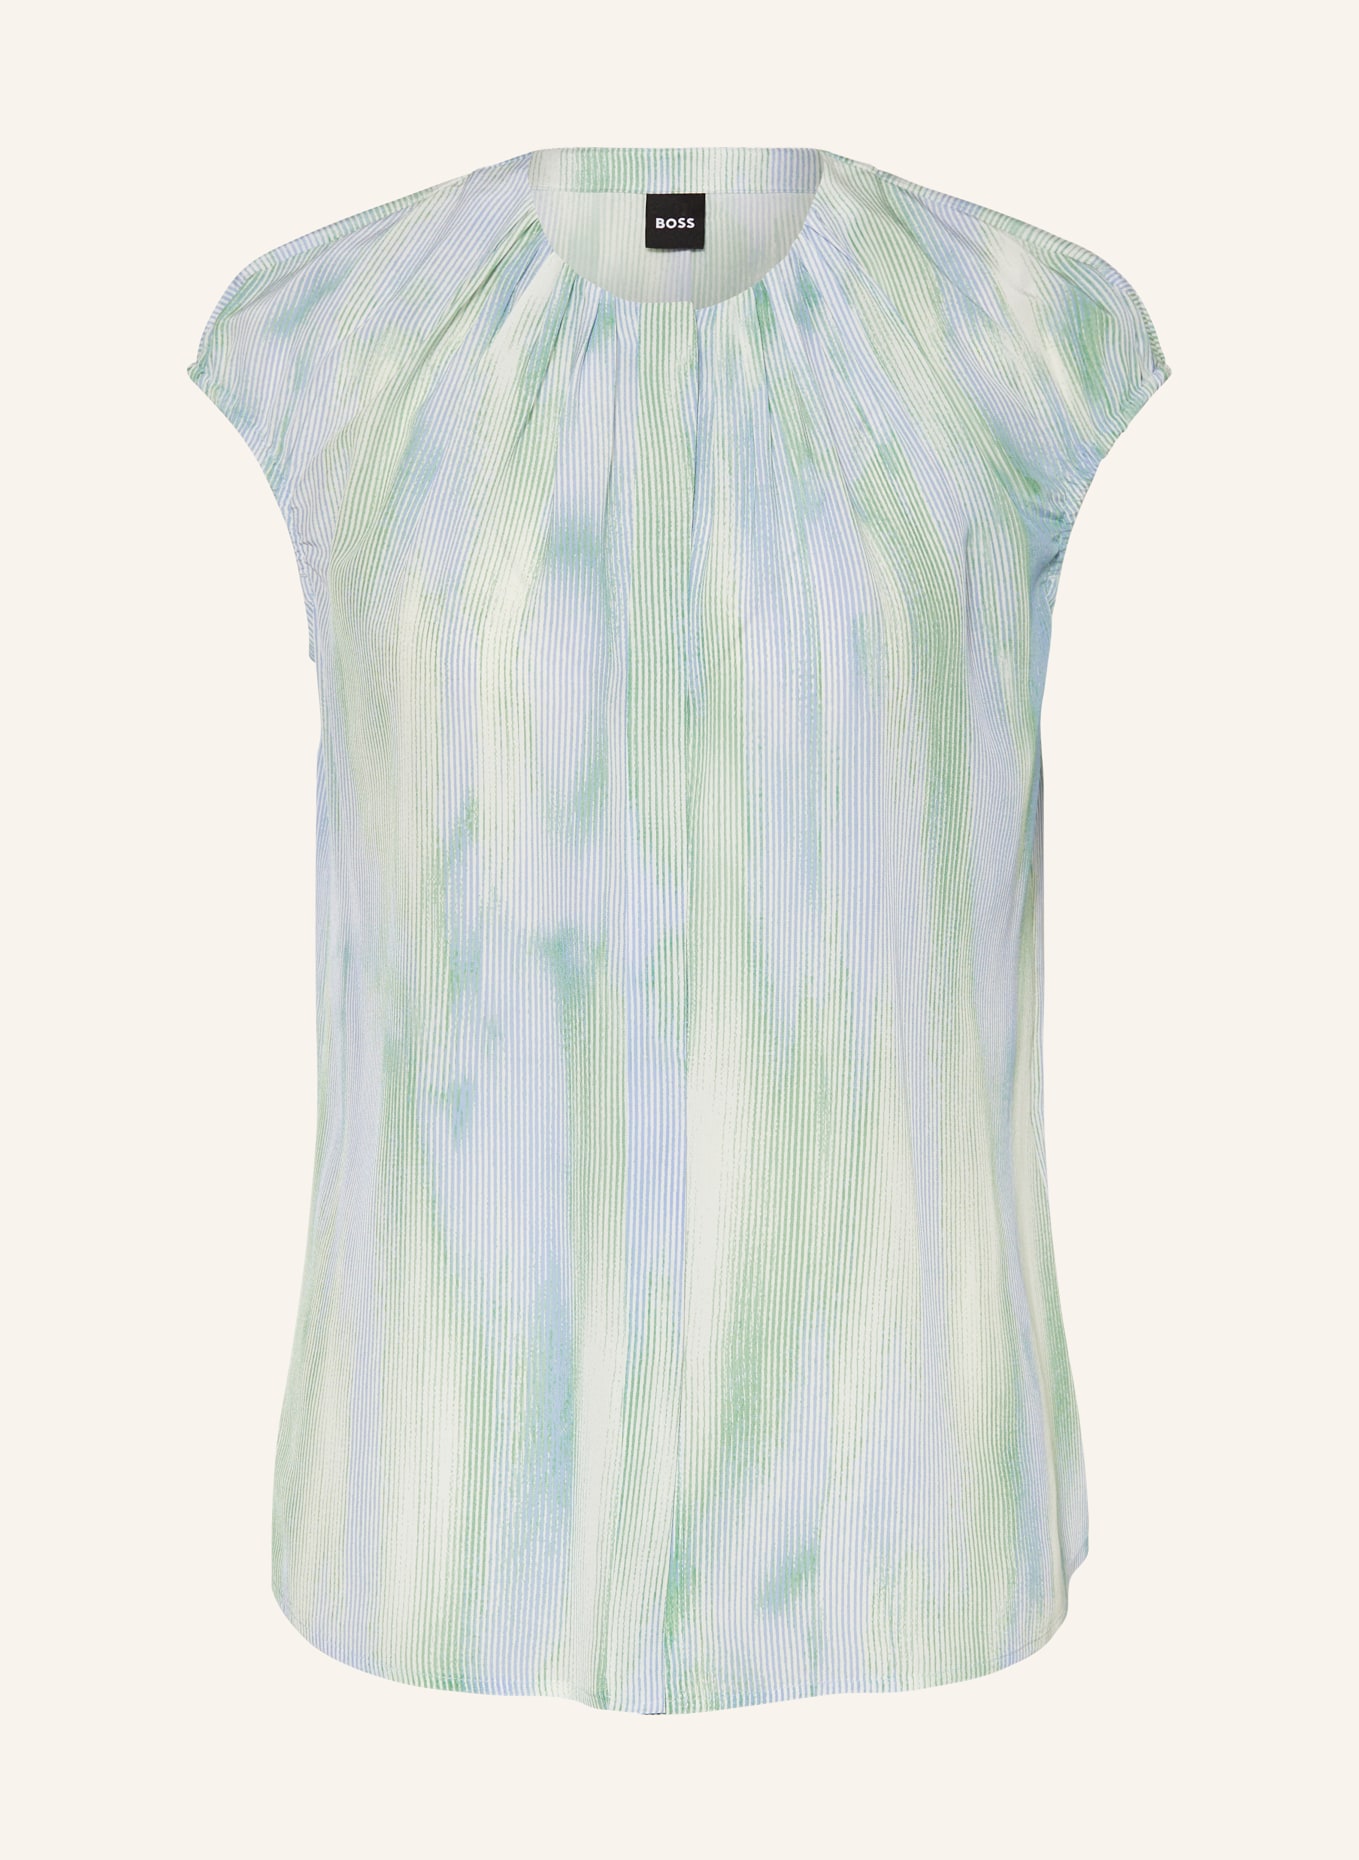 BOSS Blouse top BERIKA in silk, Color: LIGHT BLUE/ LIGHT GREEN (Image 1)